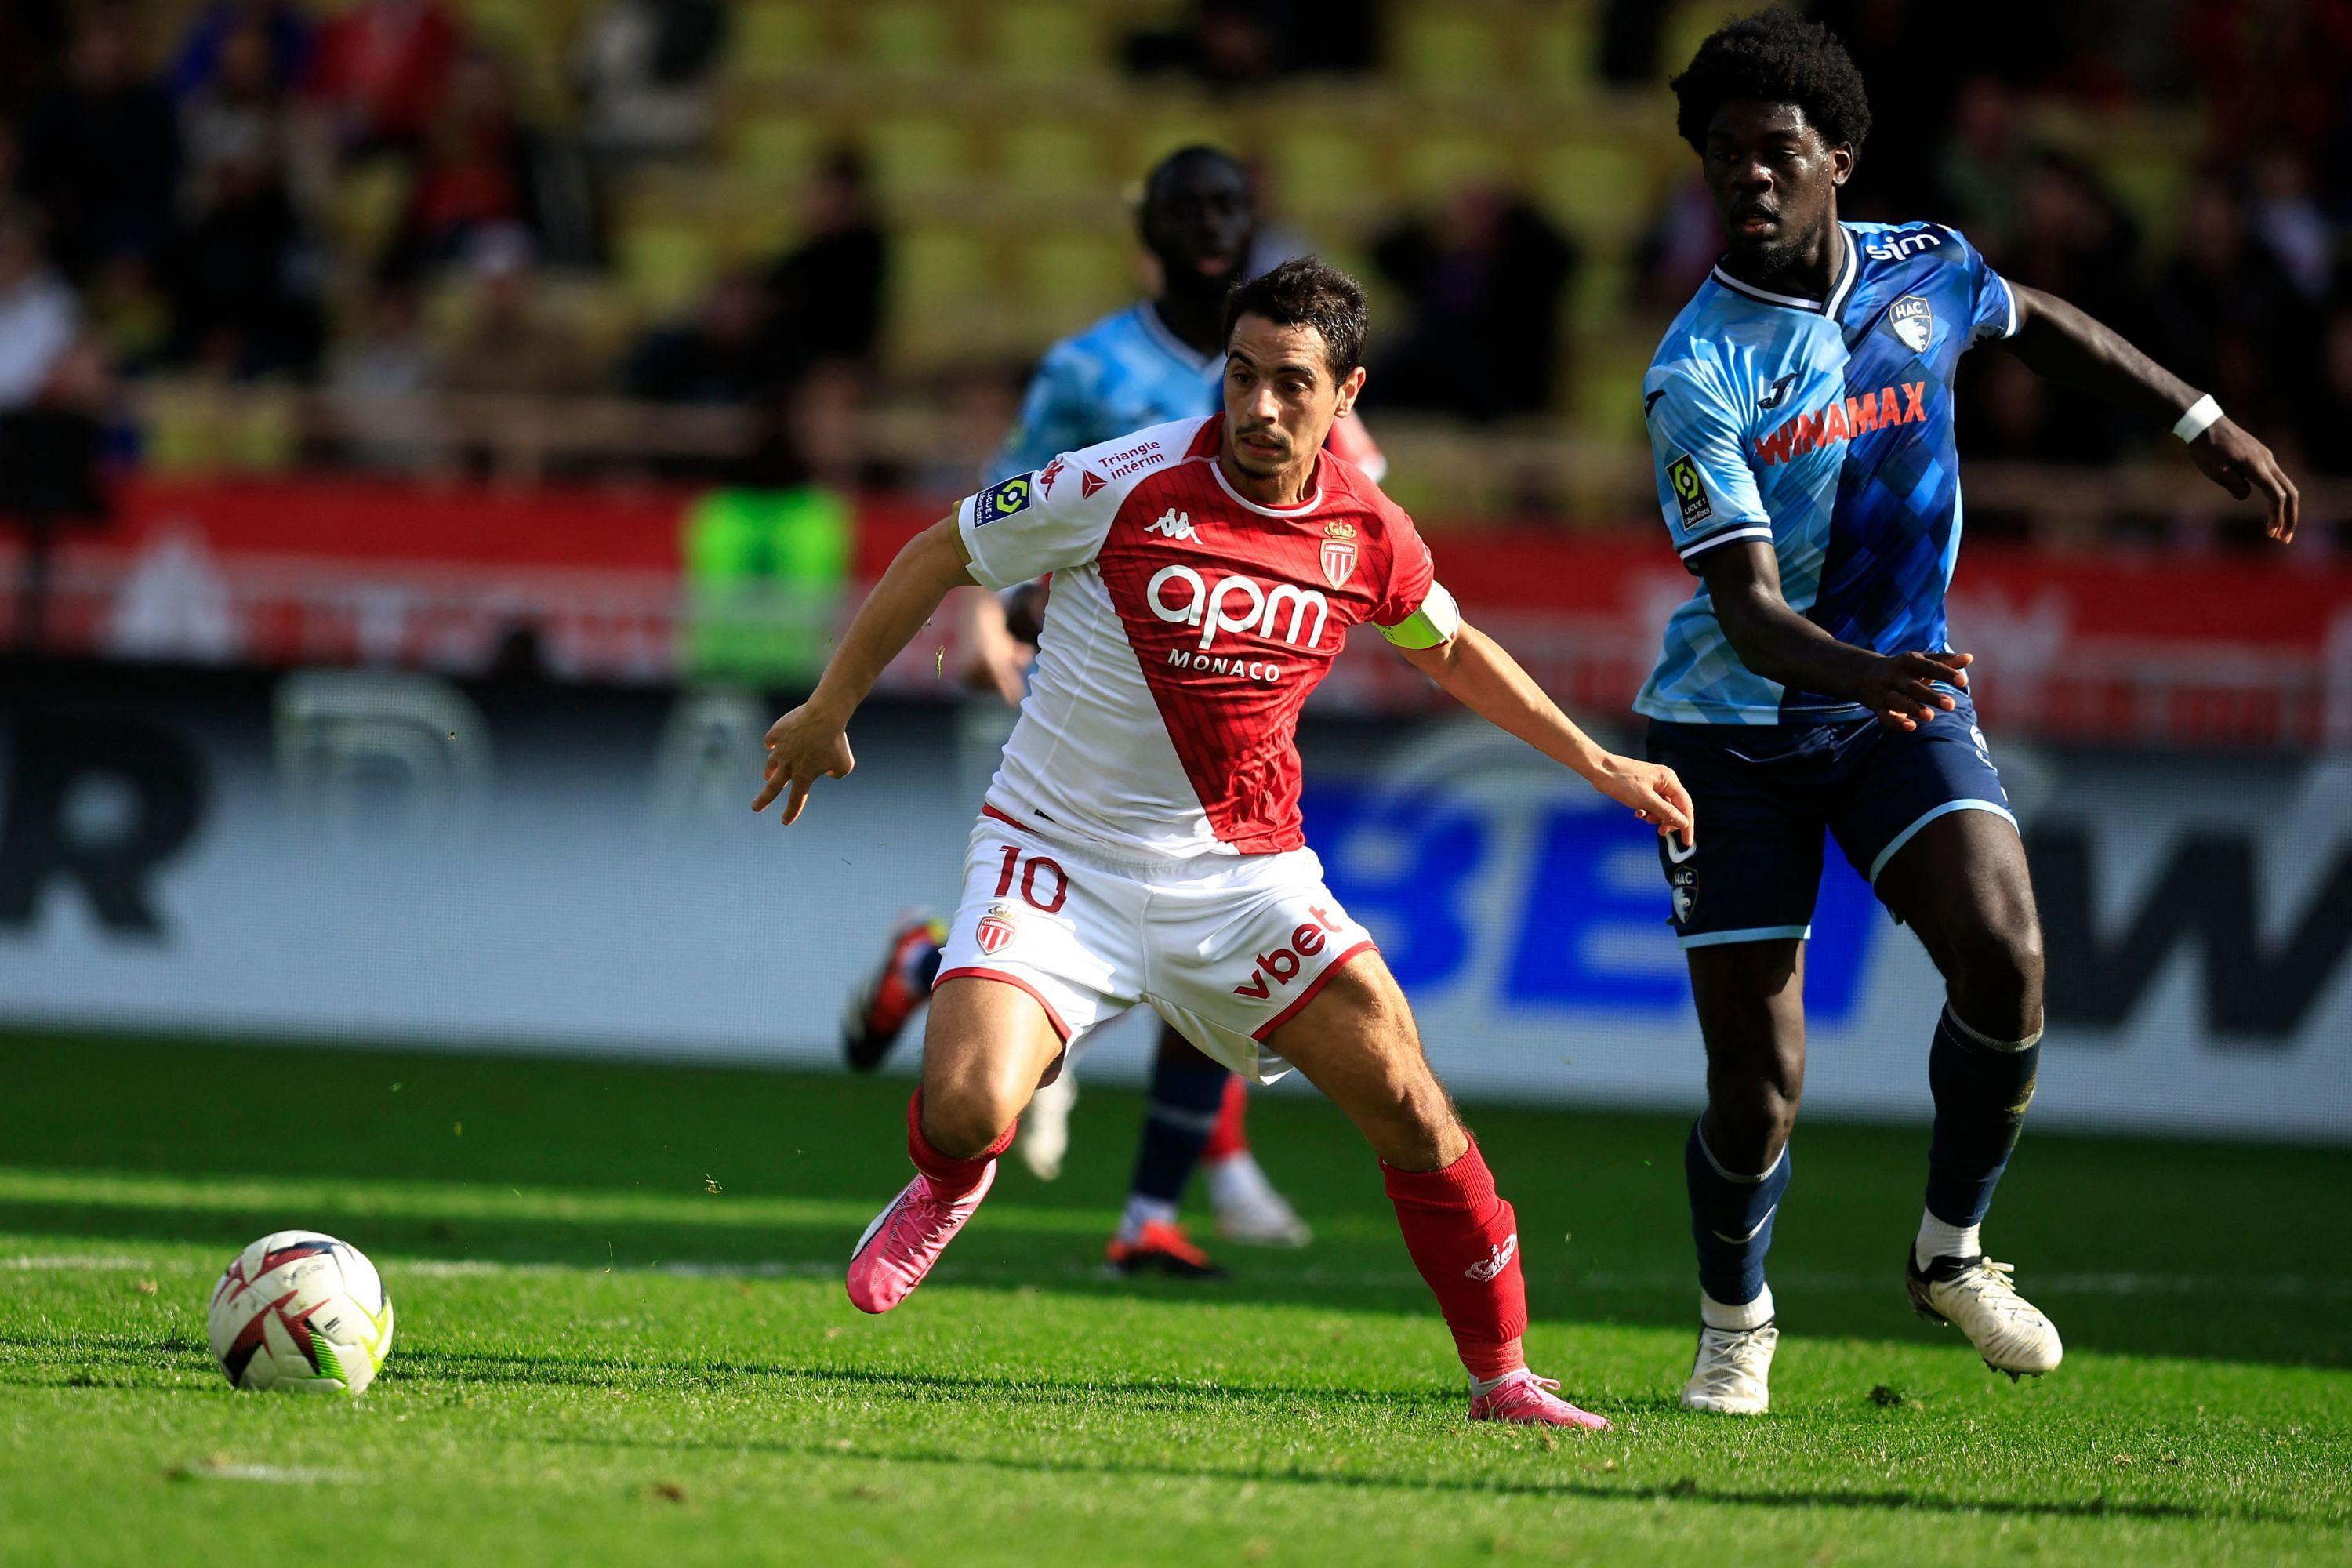 Coupe de France: Monaco captain Wissam Ben Yedder withdraws from Rouen